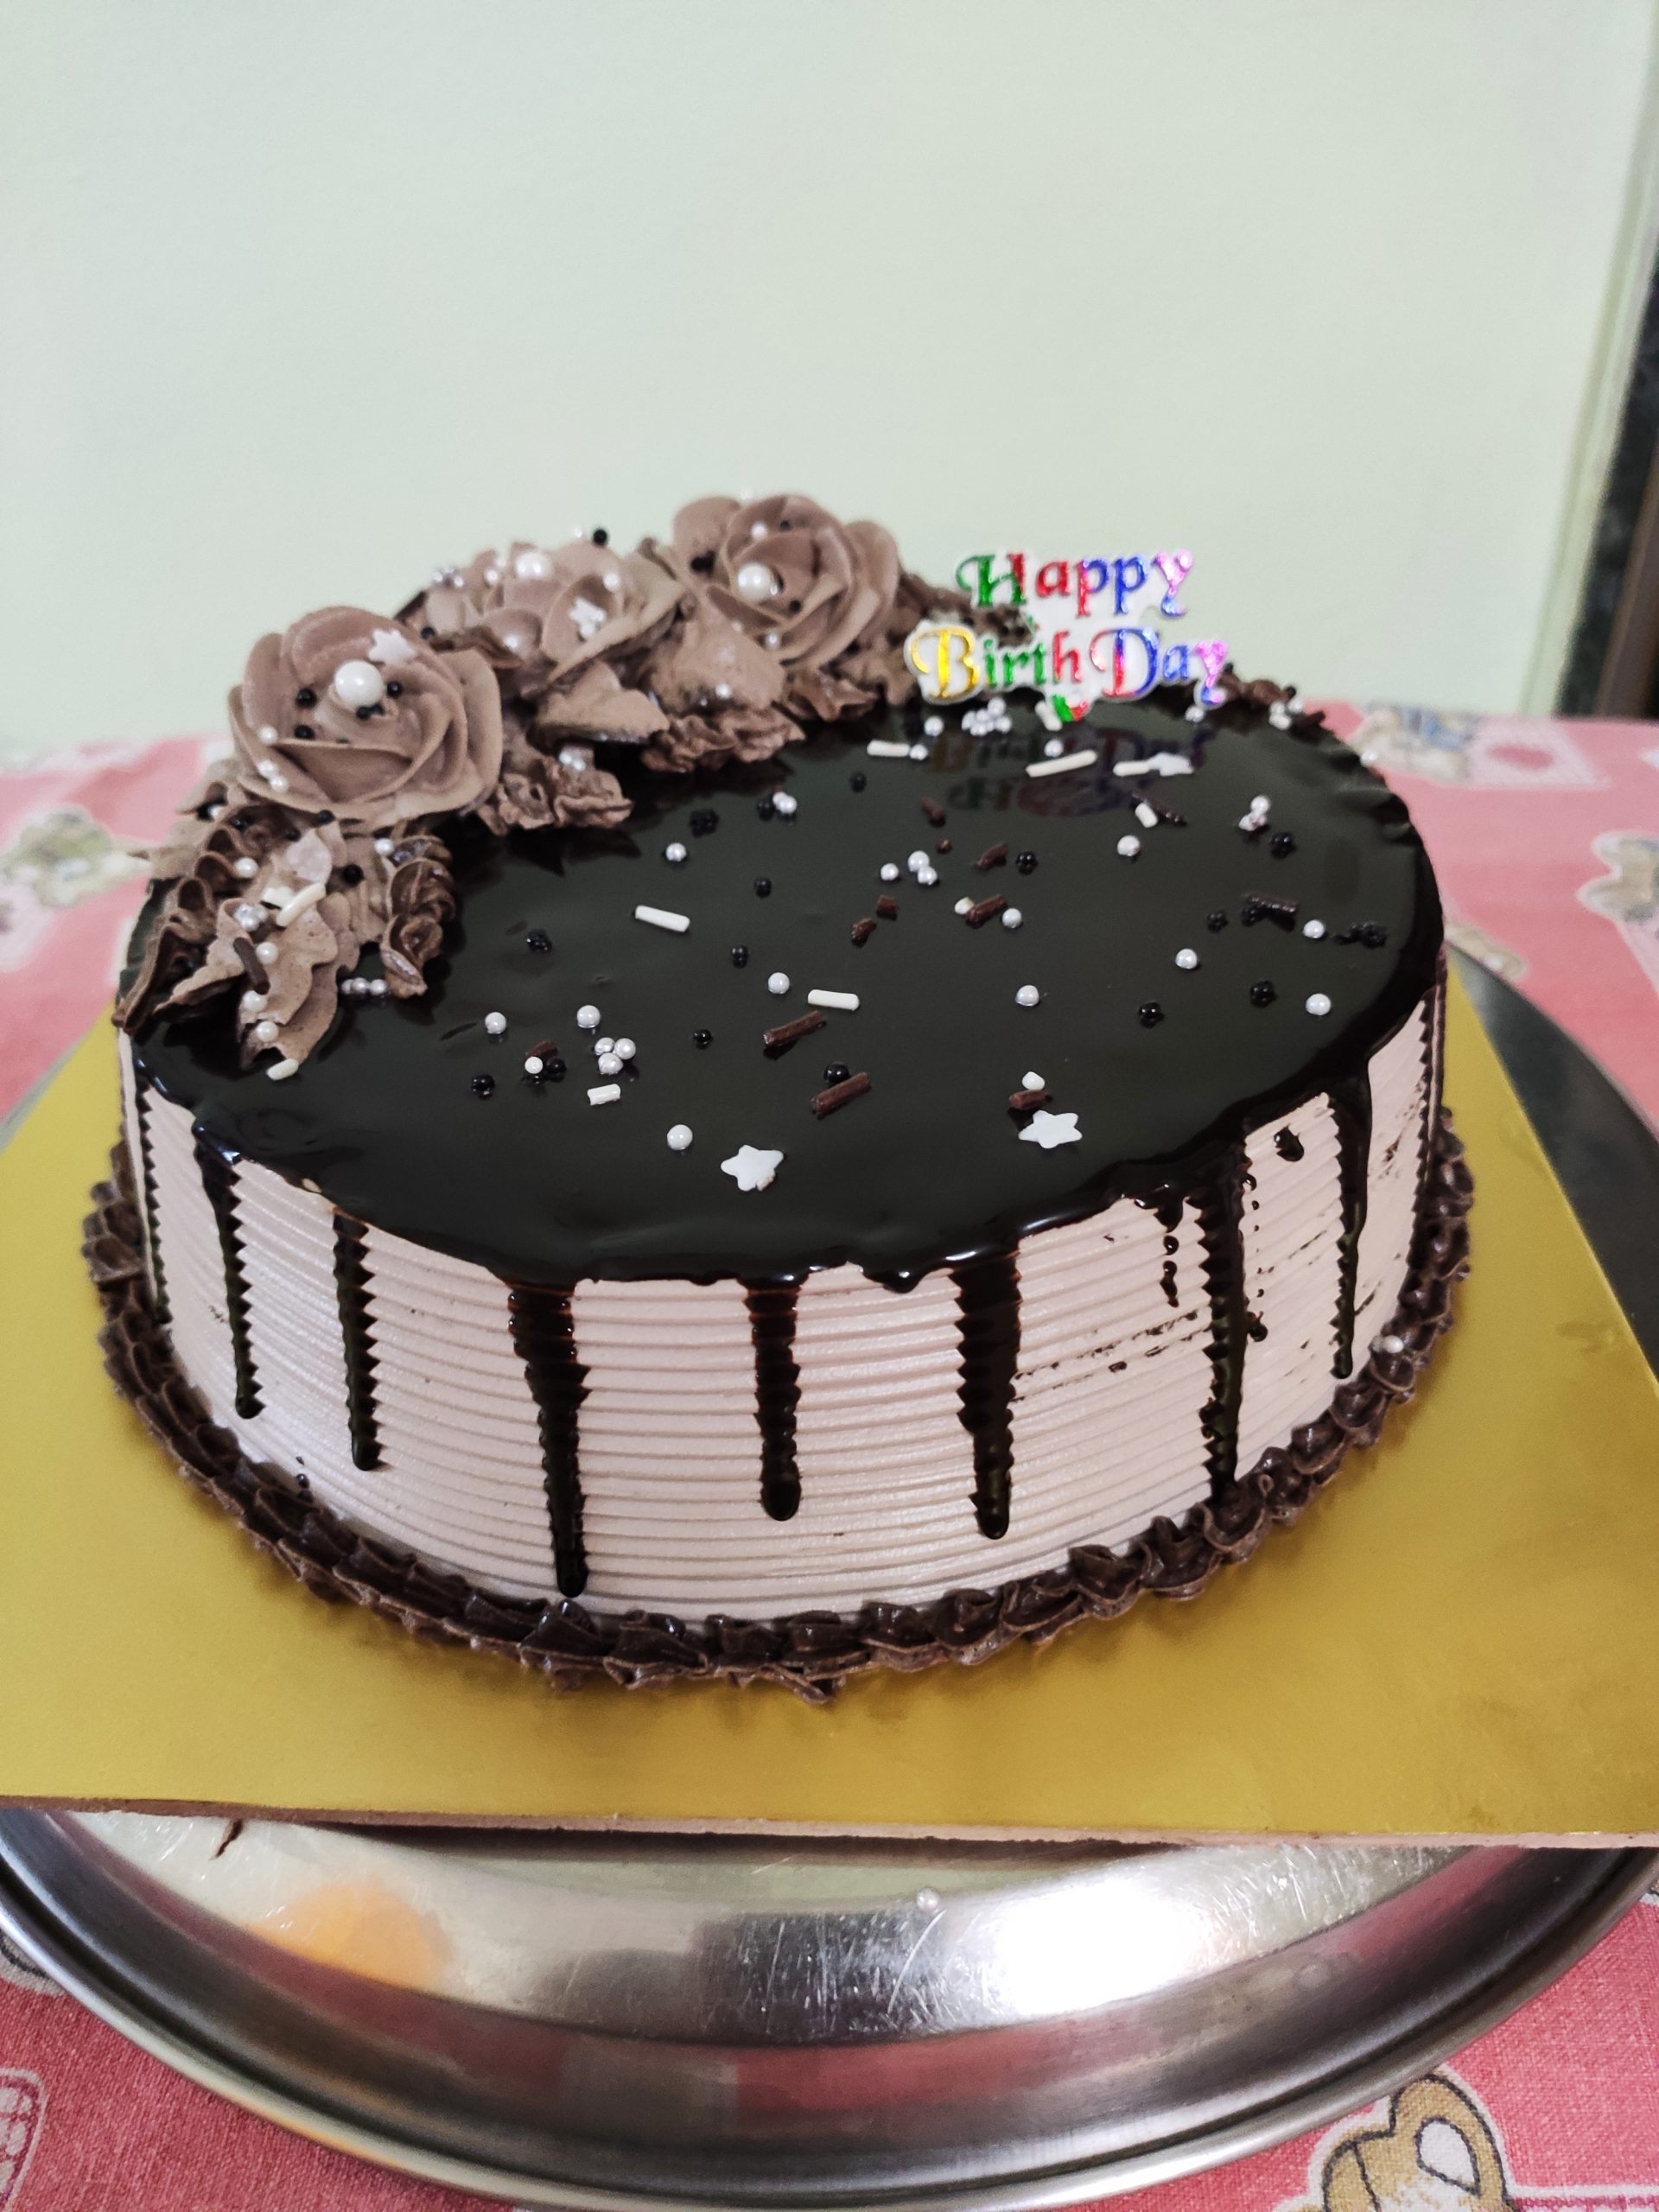 A birthday cake